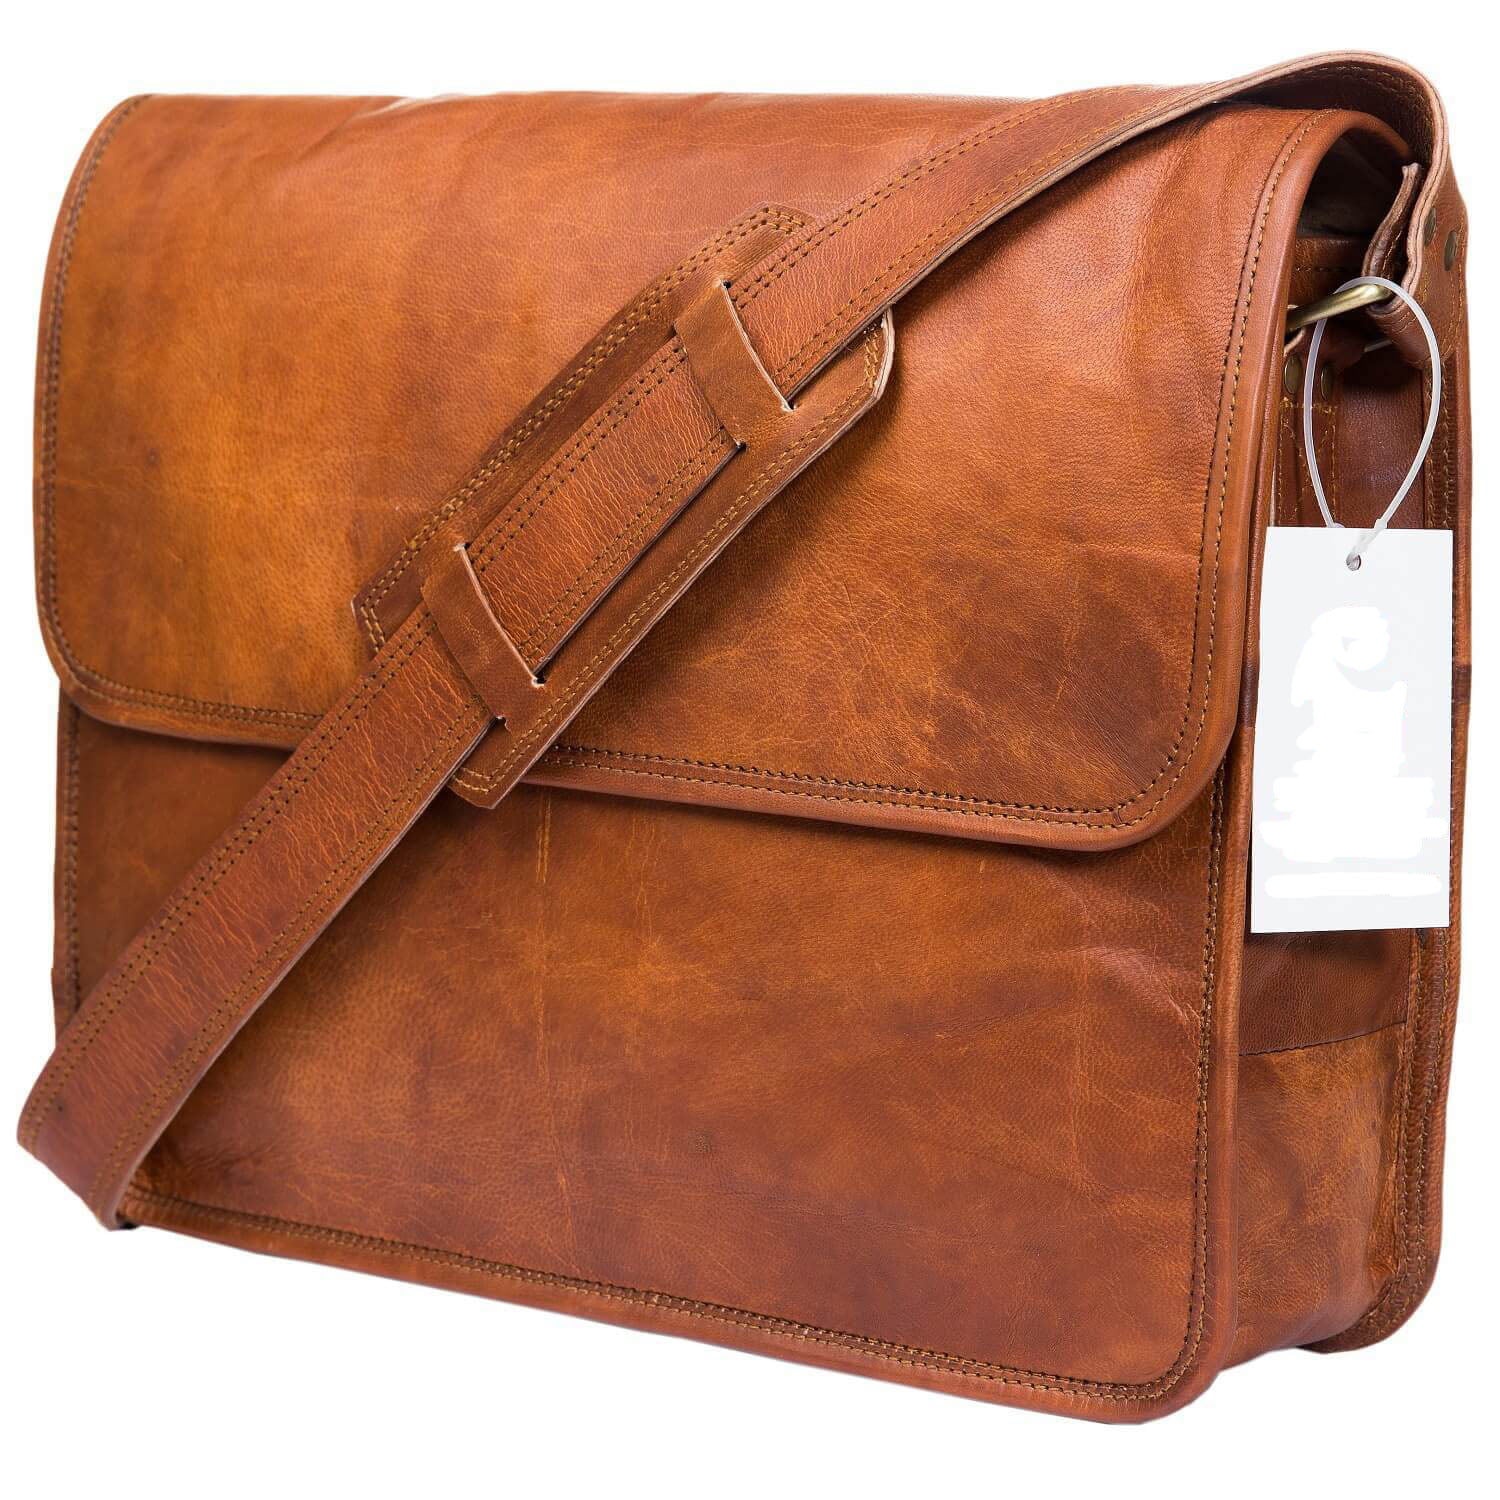 Mens Shoulder Bag 14 Inch Vintage Canvas Bag Water Resistant Anti-Theft for College Travel Business,26 11 36cm Messenger Bags Color : Brown 